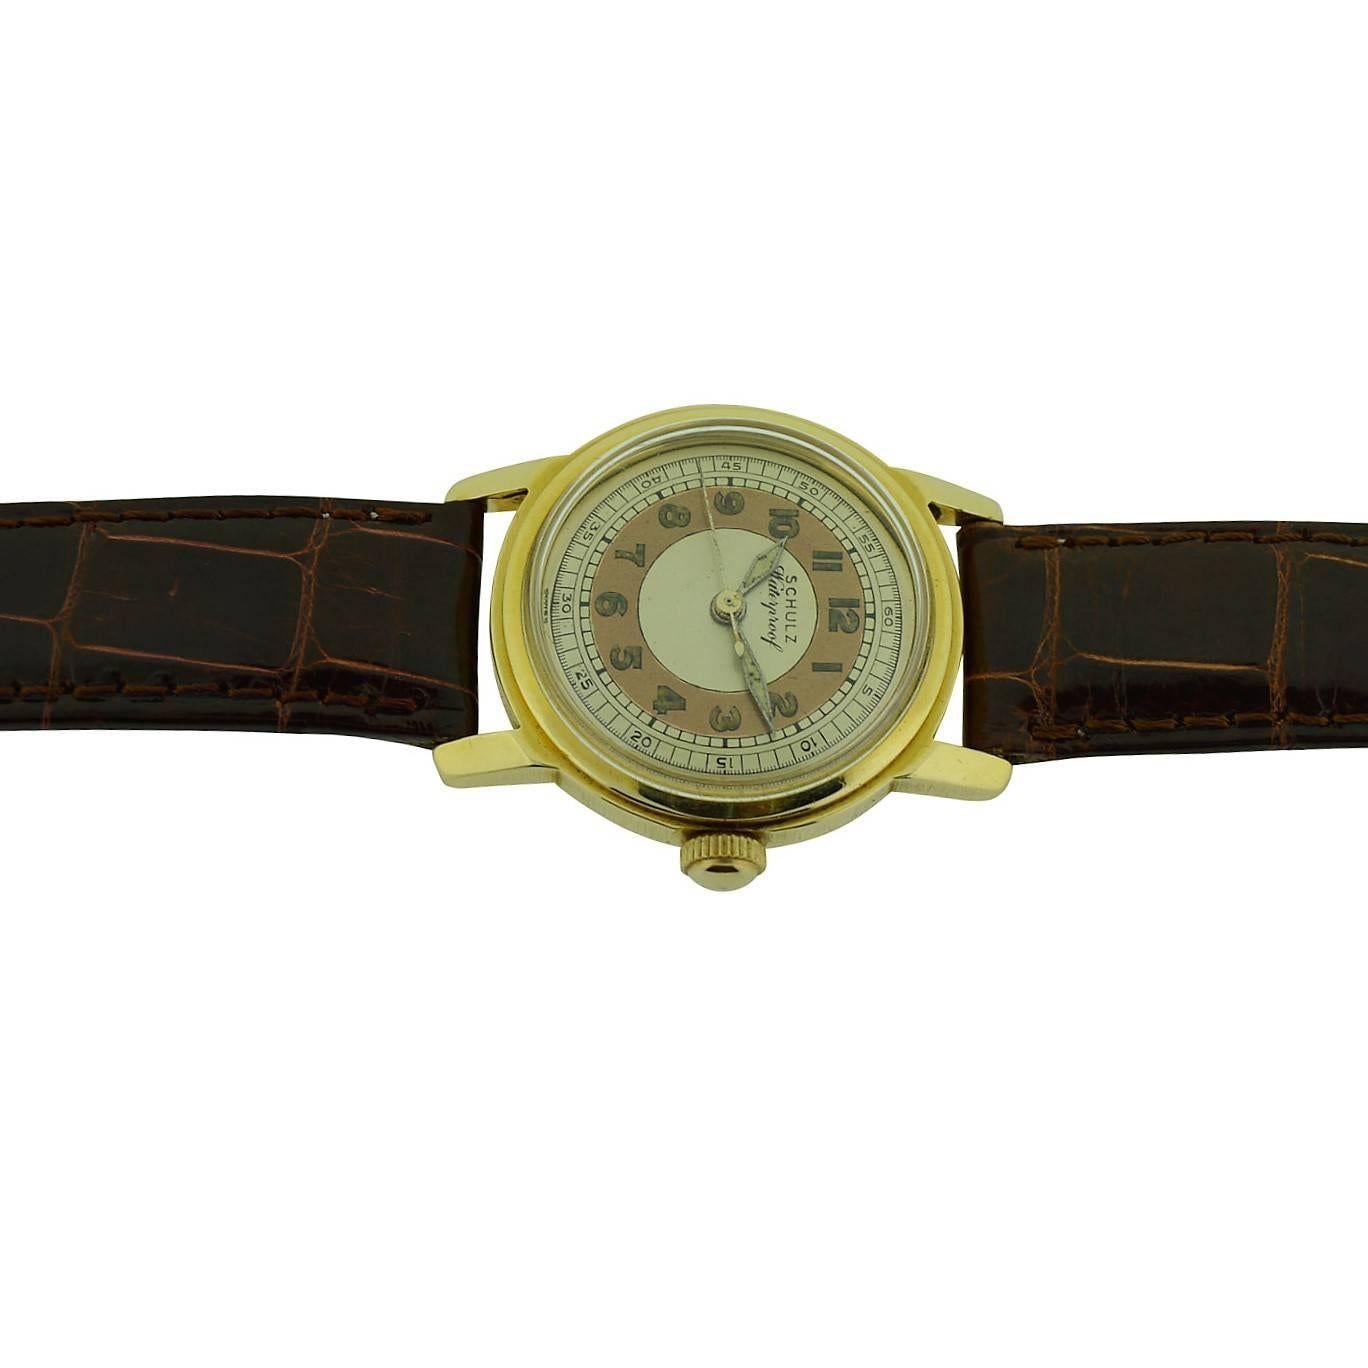 1940s watch